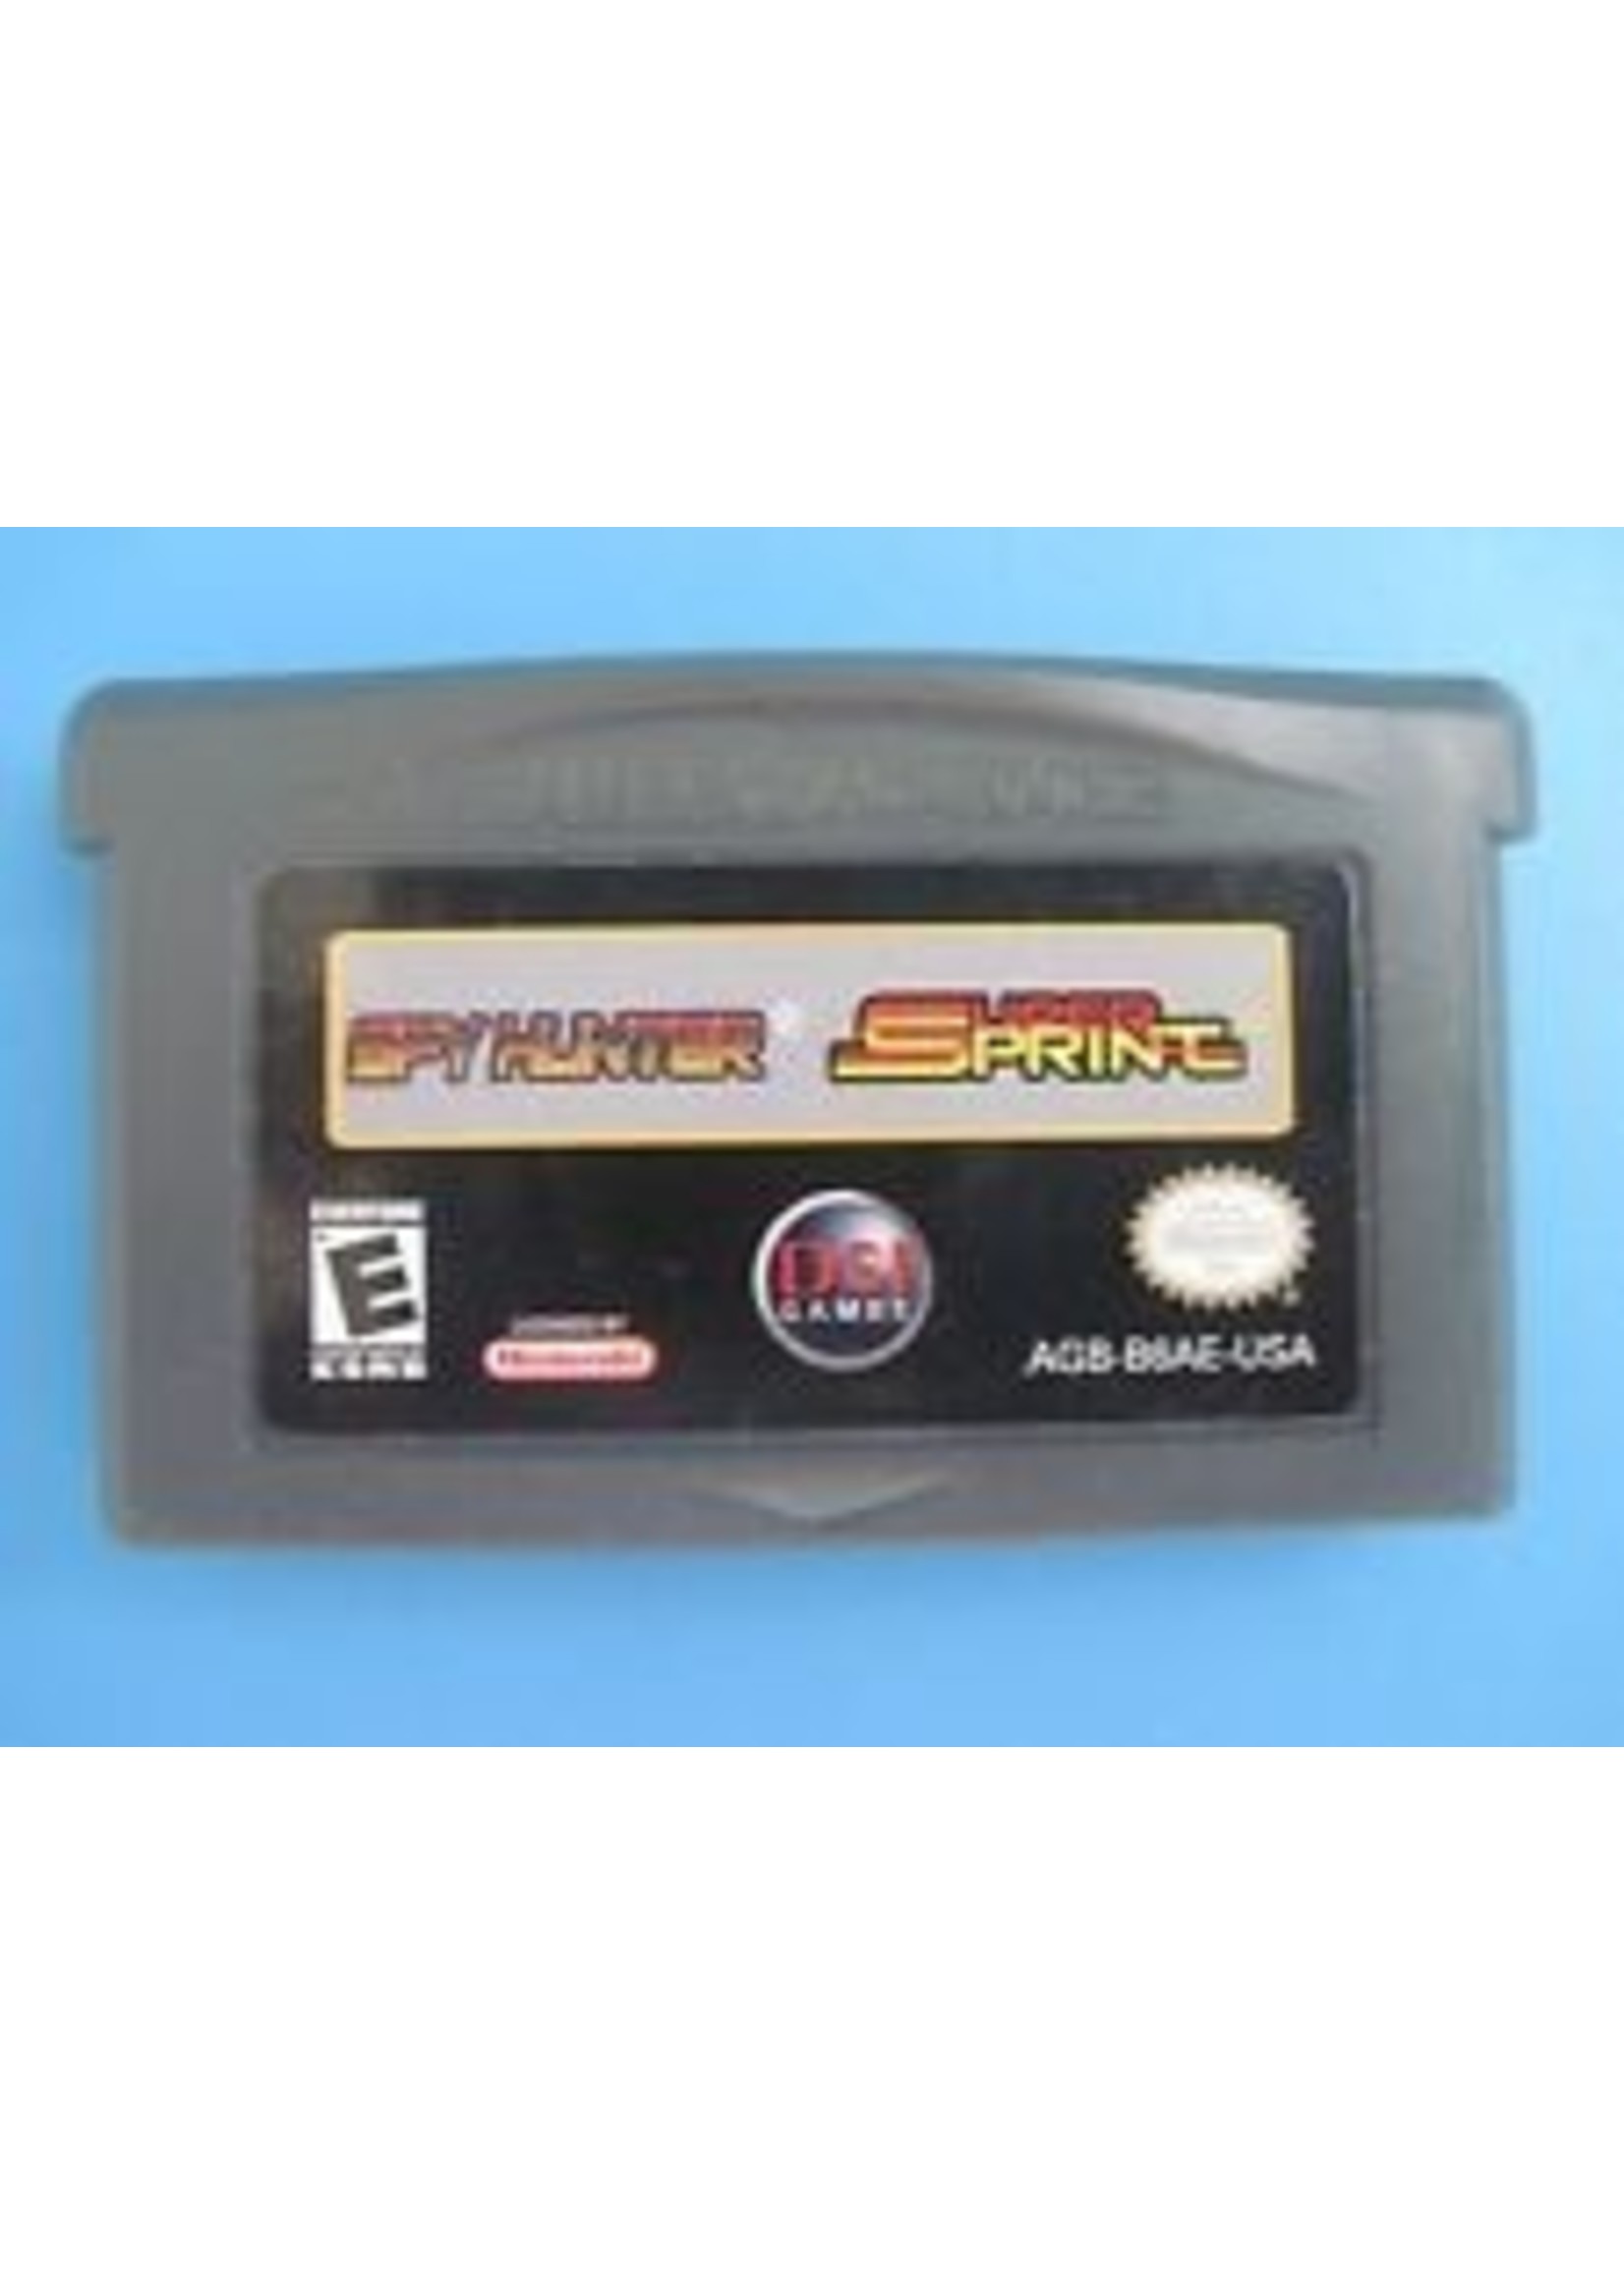 Nintendo Gameboy Advance Spy Hunter/Super Sprint